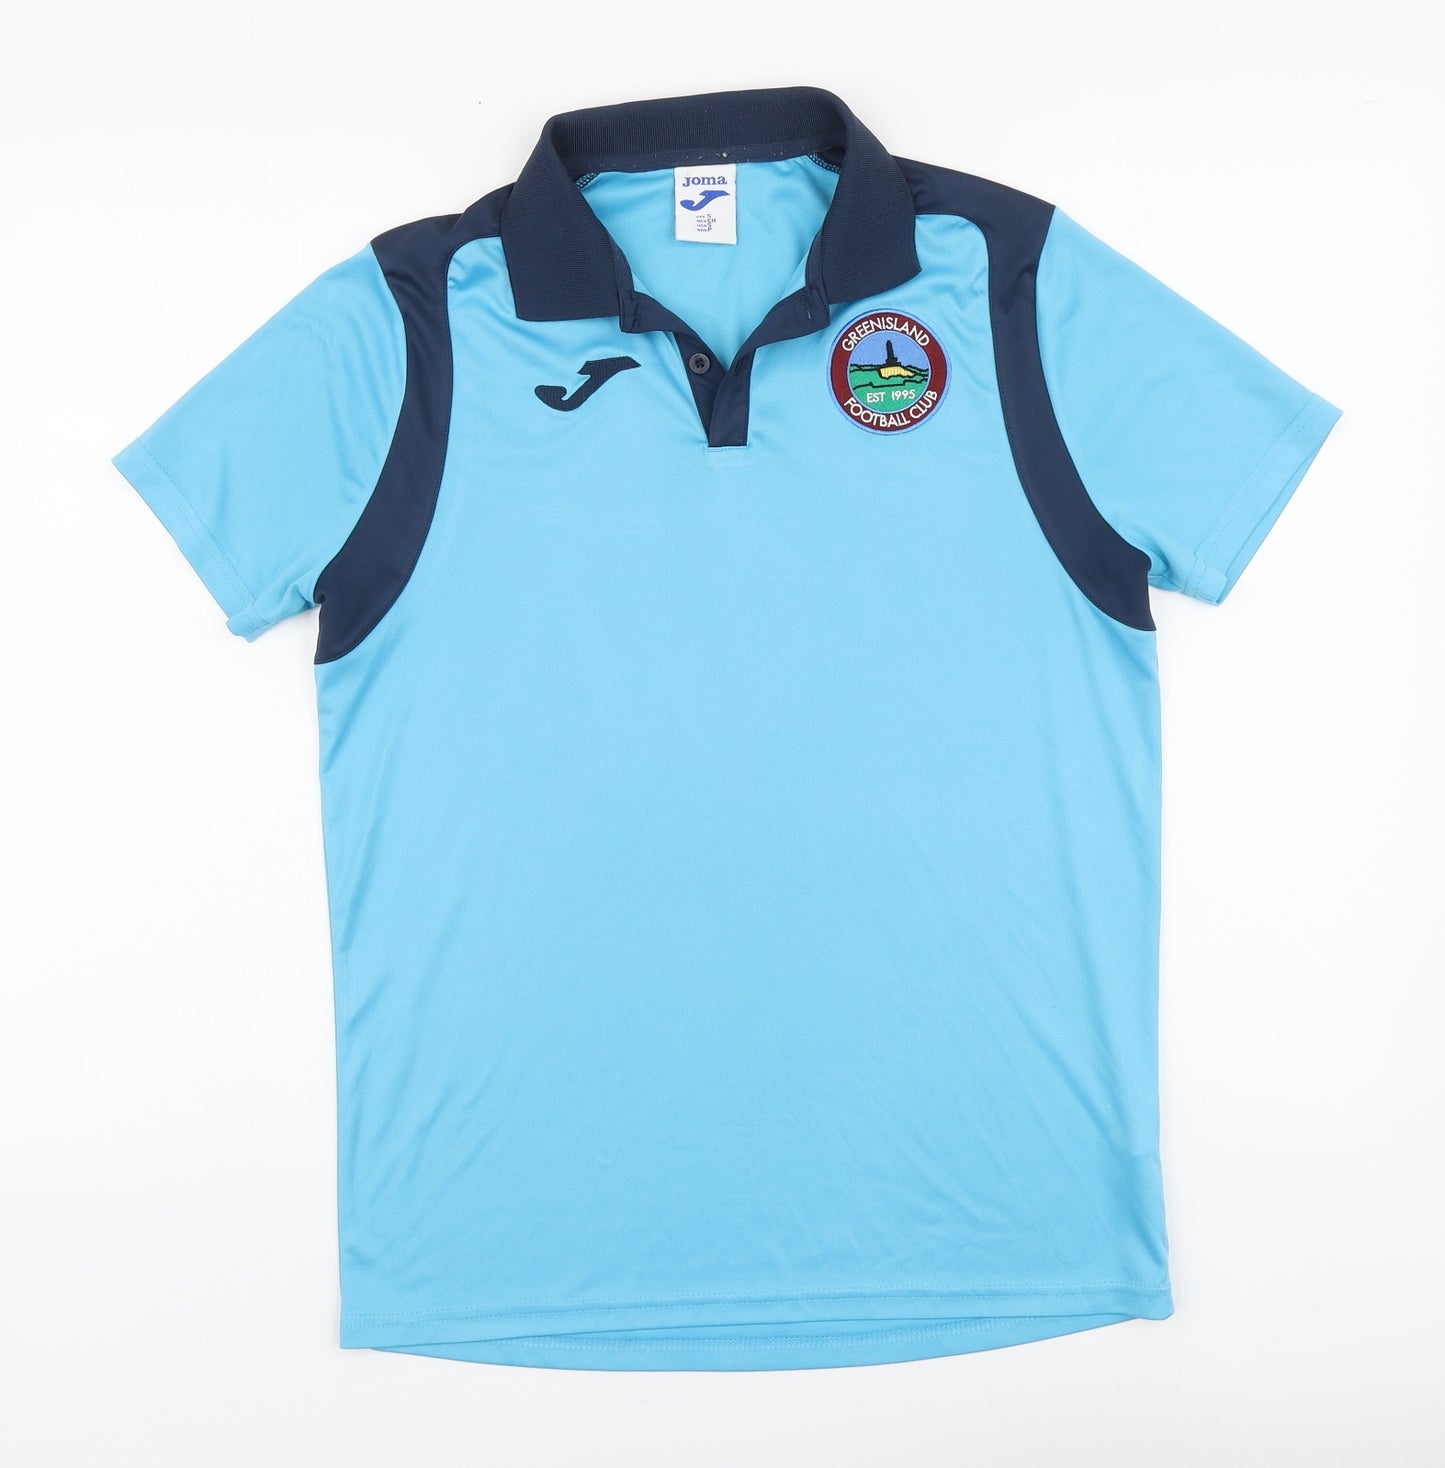 Joma Mens Blue Polyester Polo Size S Collared Pullover - Greenisland FC